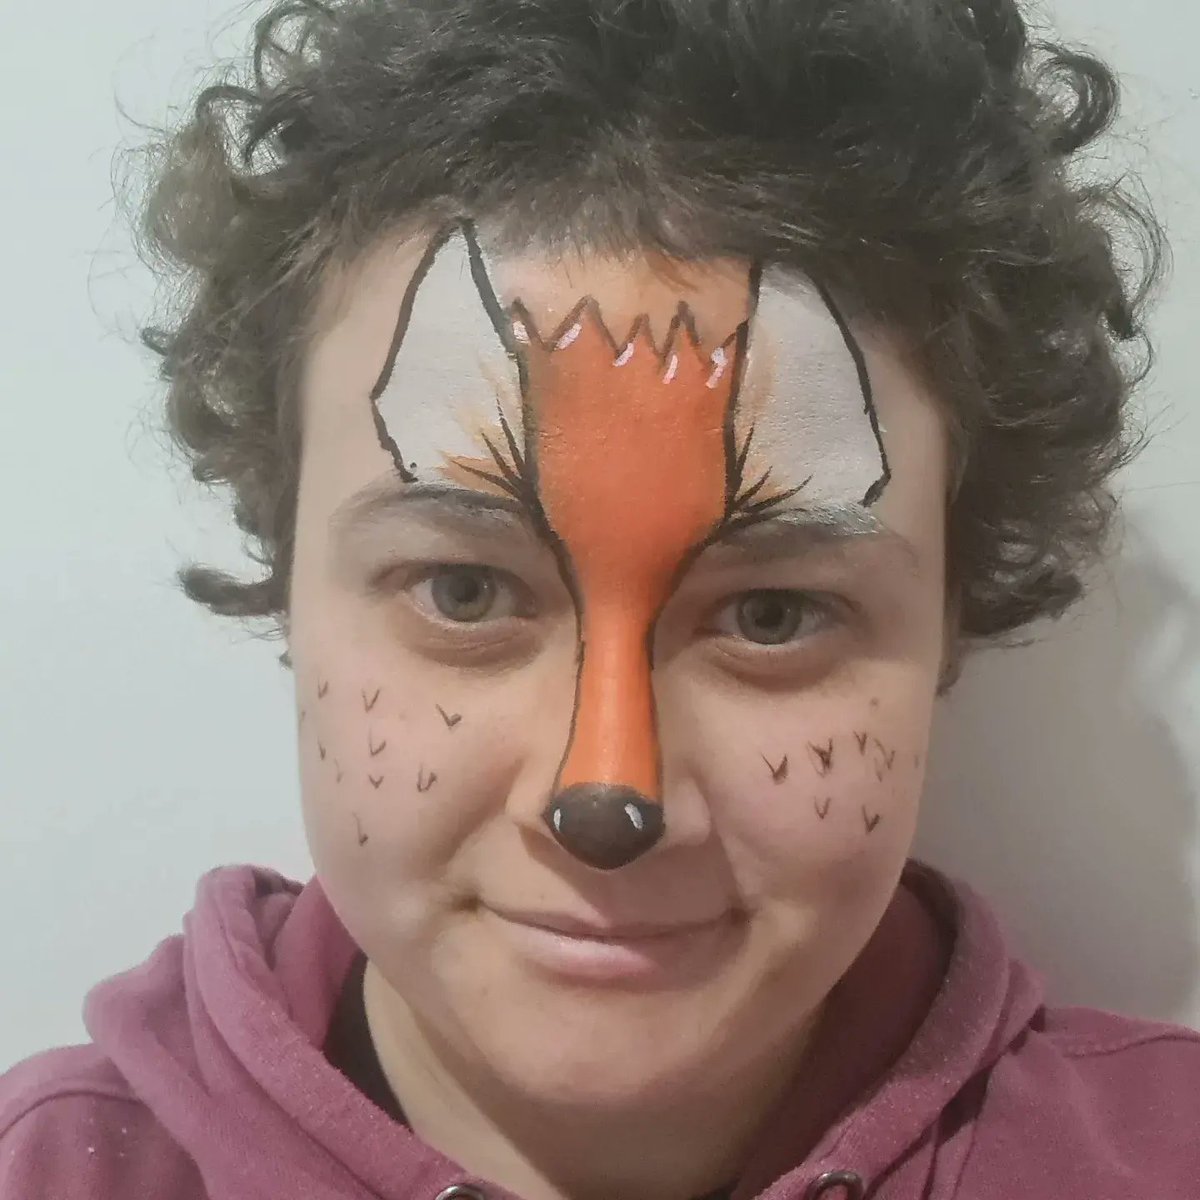 Painted a fox face design using a YouTube tutorial by @sashacam595. 🦊🤸‍♂️🤸🖌🎨

#facepaint #facepainting #fox #wildanimals #woodlandcreature #nature #forestfriends